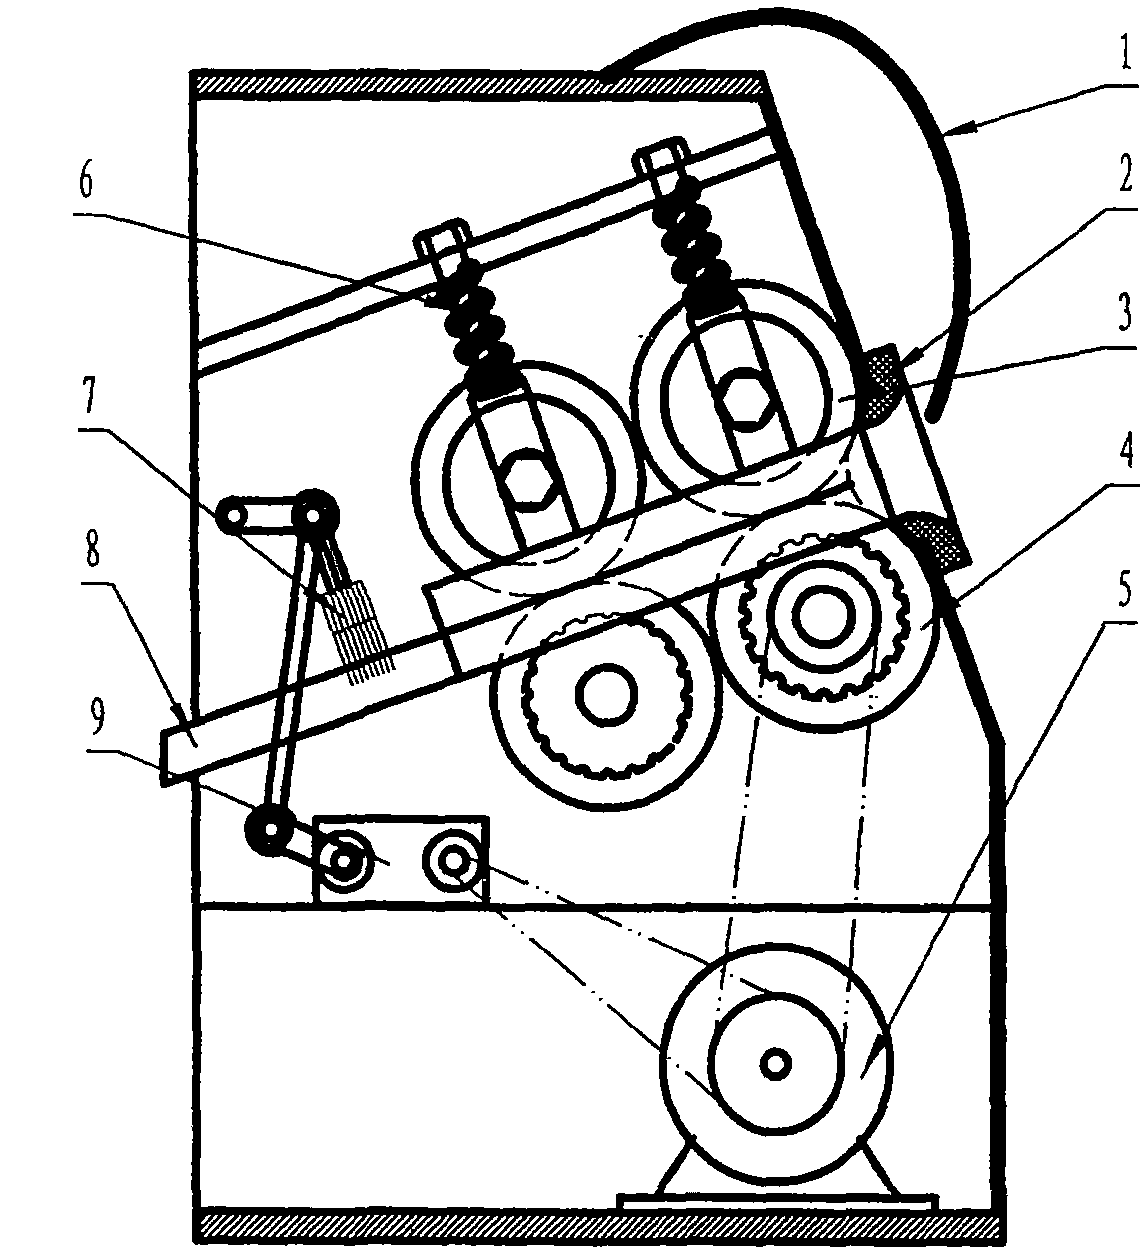 Pattern cutting device of food machine